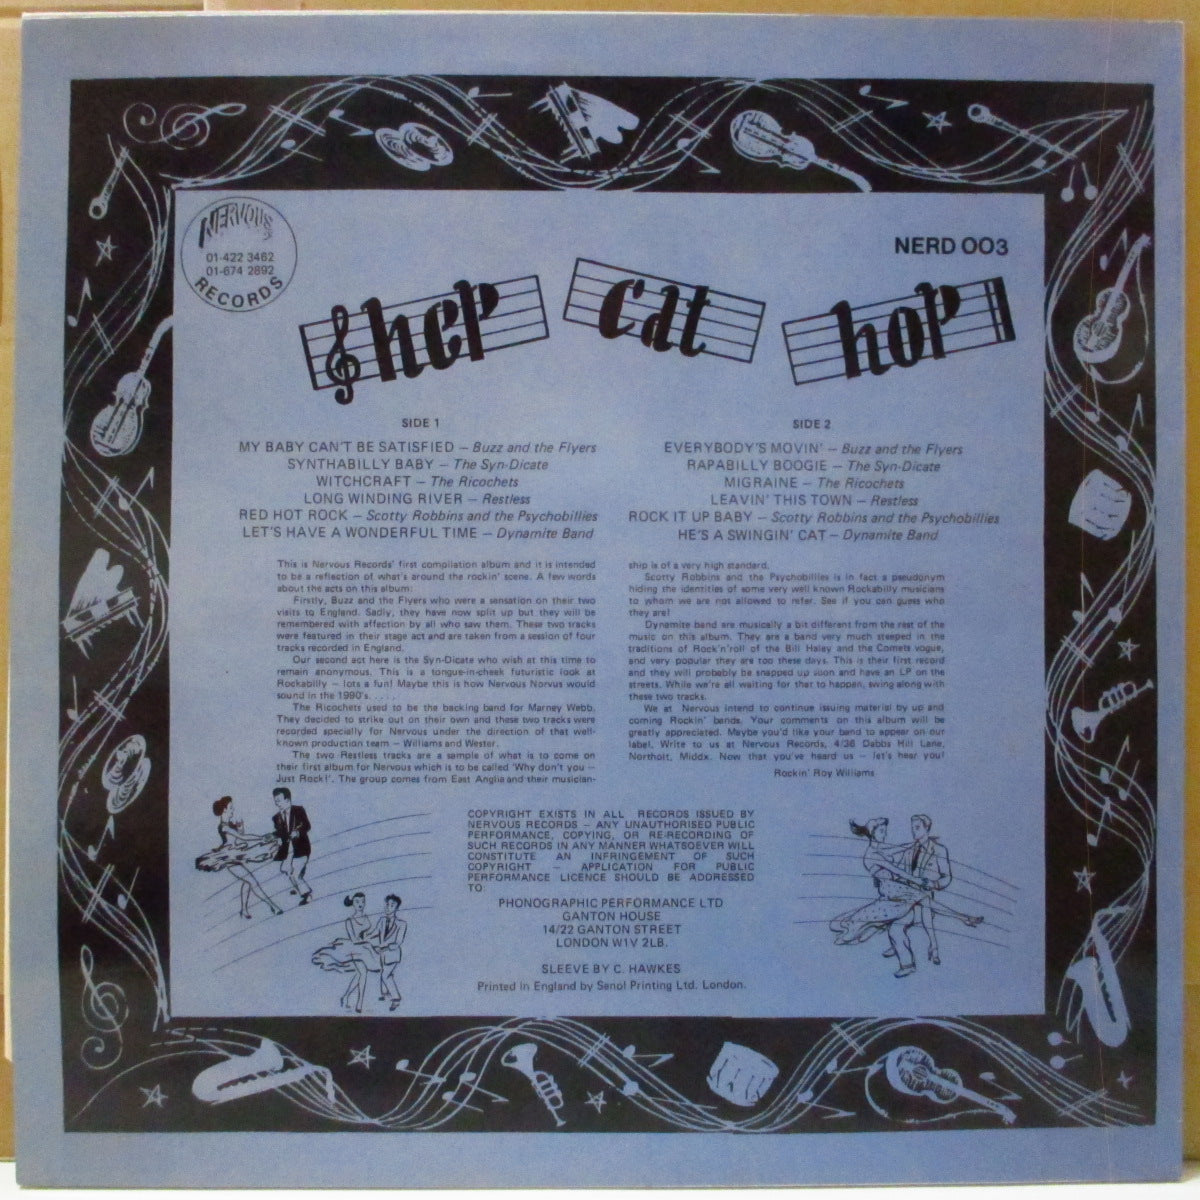 V.A. ('80s UK・ネオロカ/サイコビリー・コンピ)  - Hep Cat Hop (UK オリジナル LP)